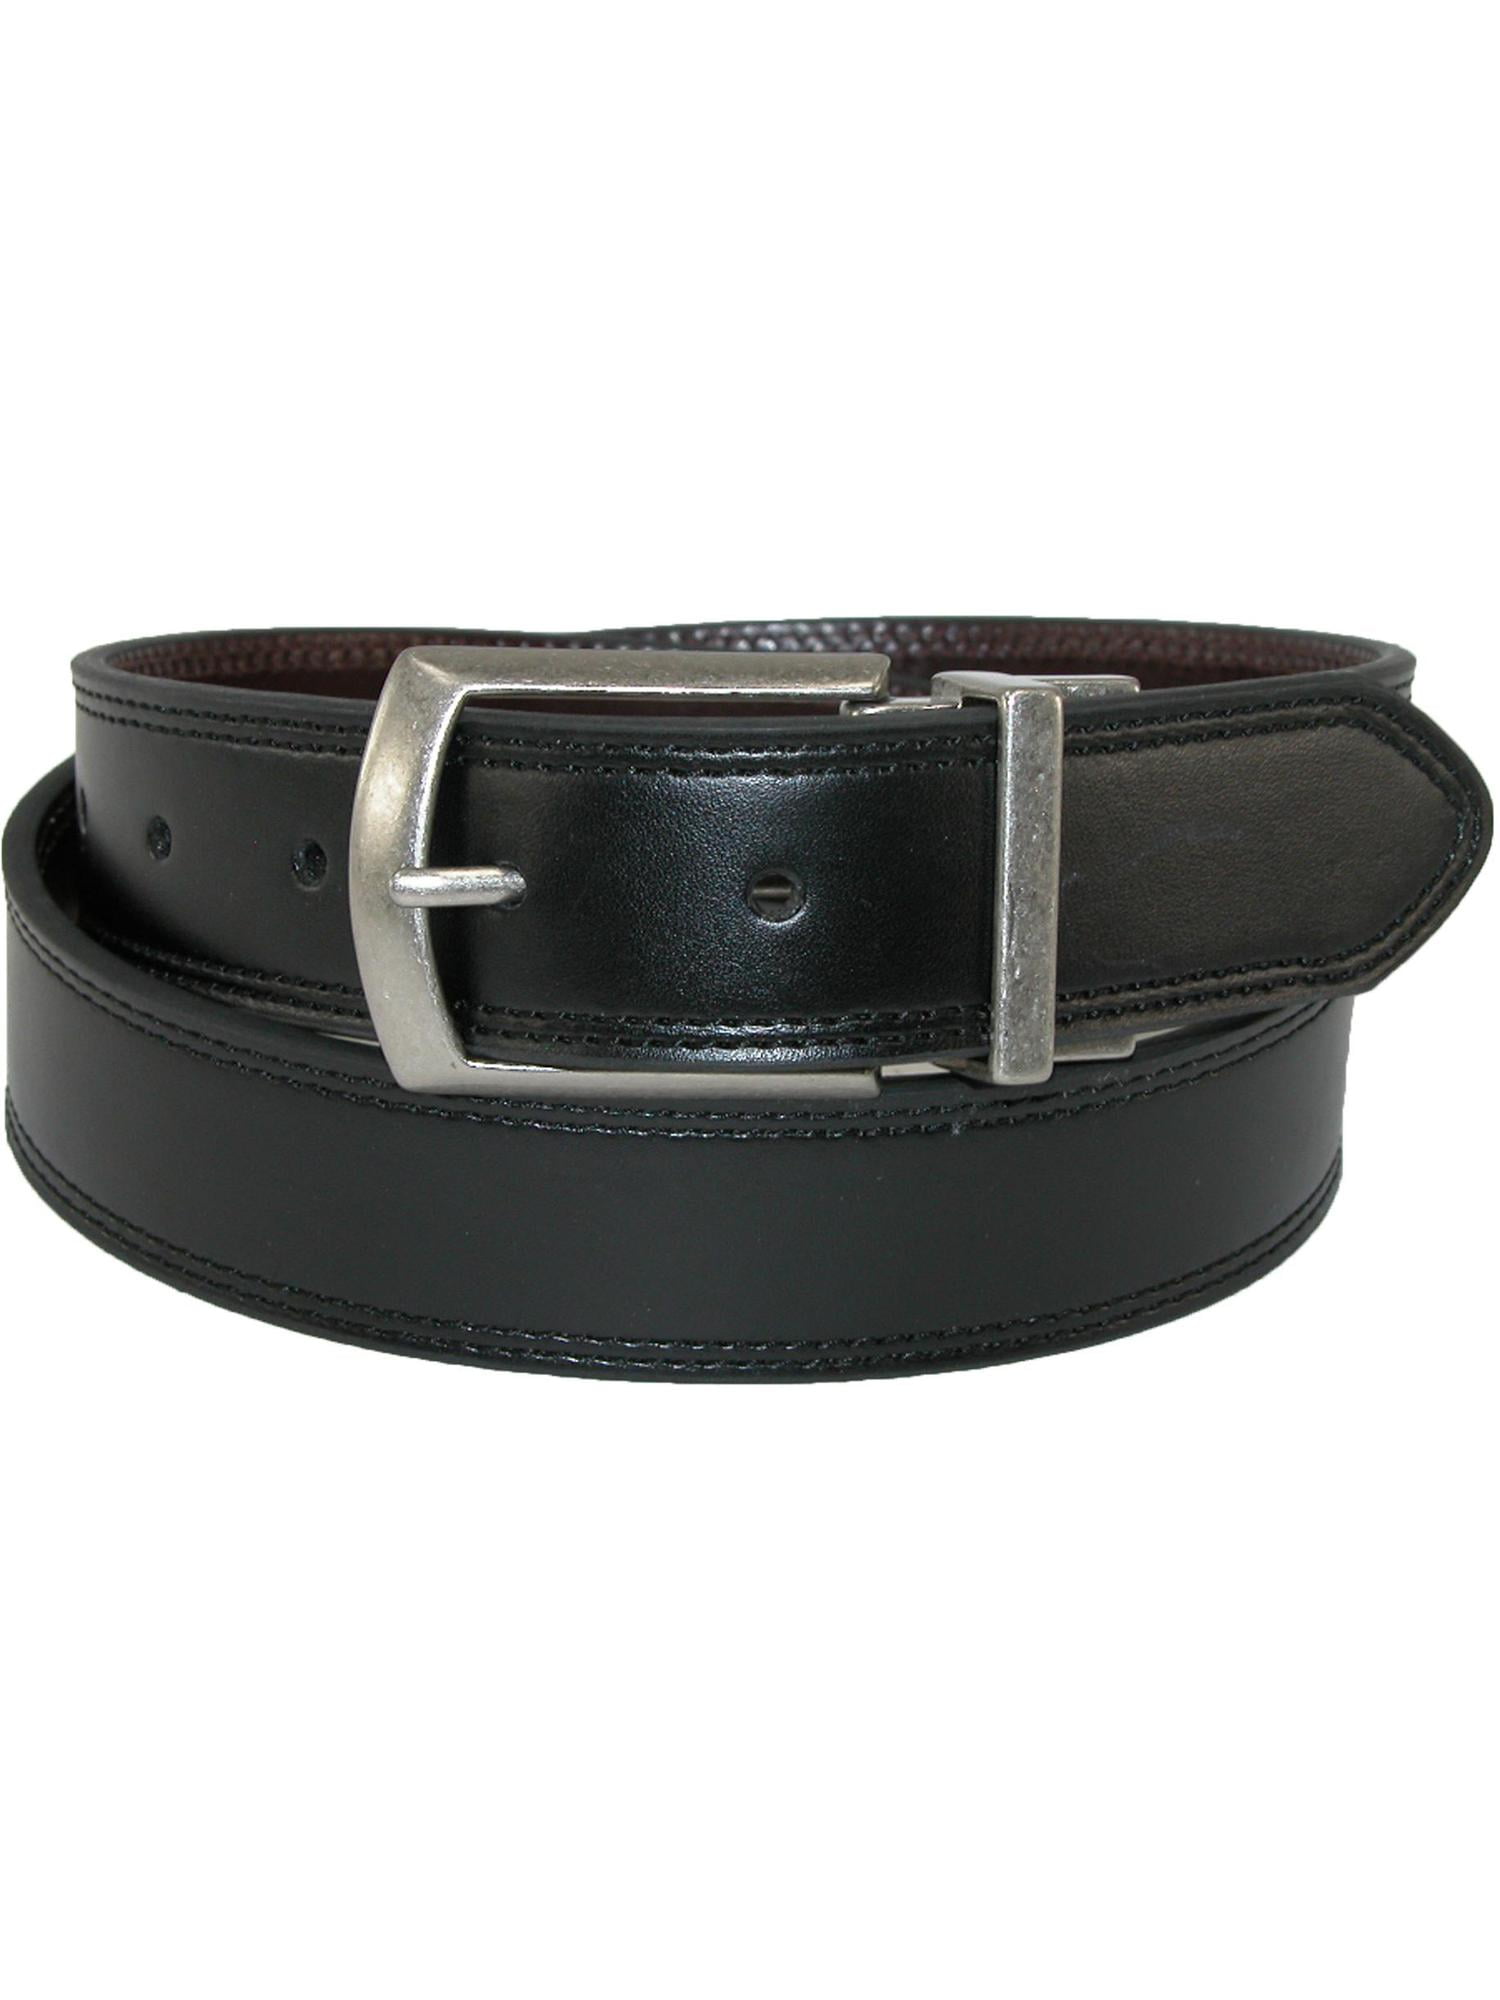 Mens Leather Belts Lion Diamond Designer Belt for Men Jeans Dress 38mm QHA  Q3-01